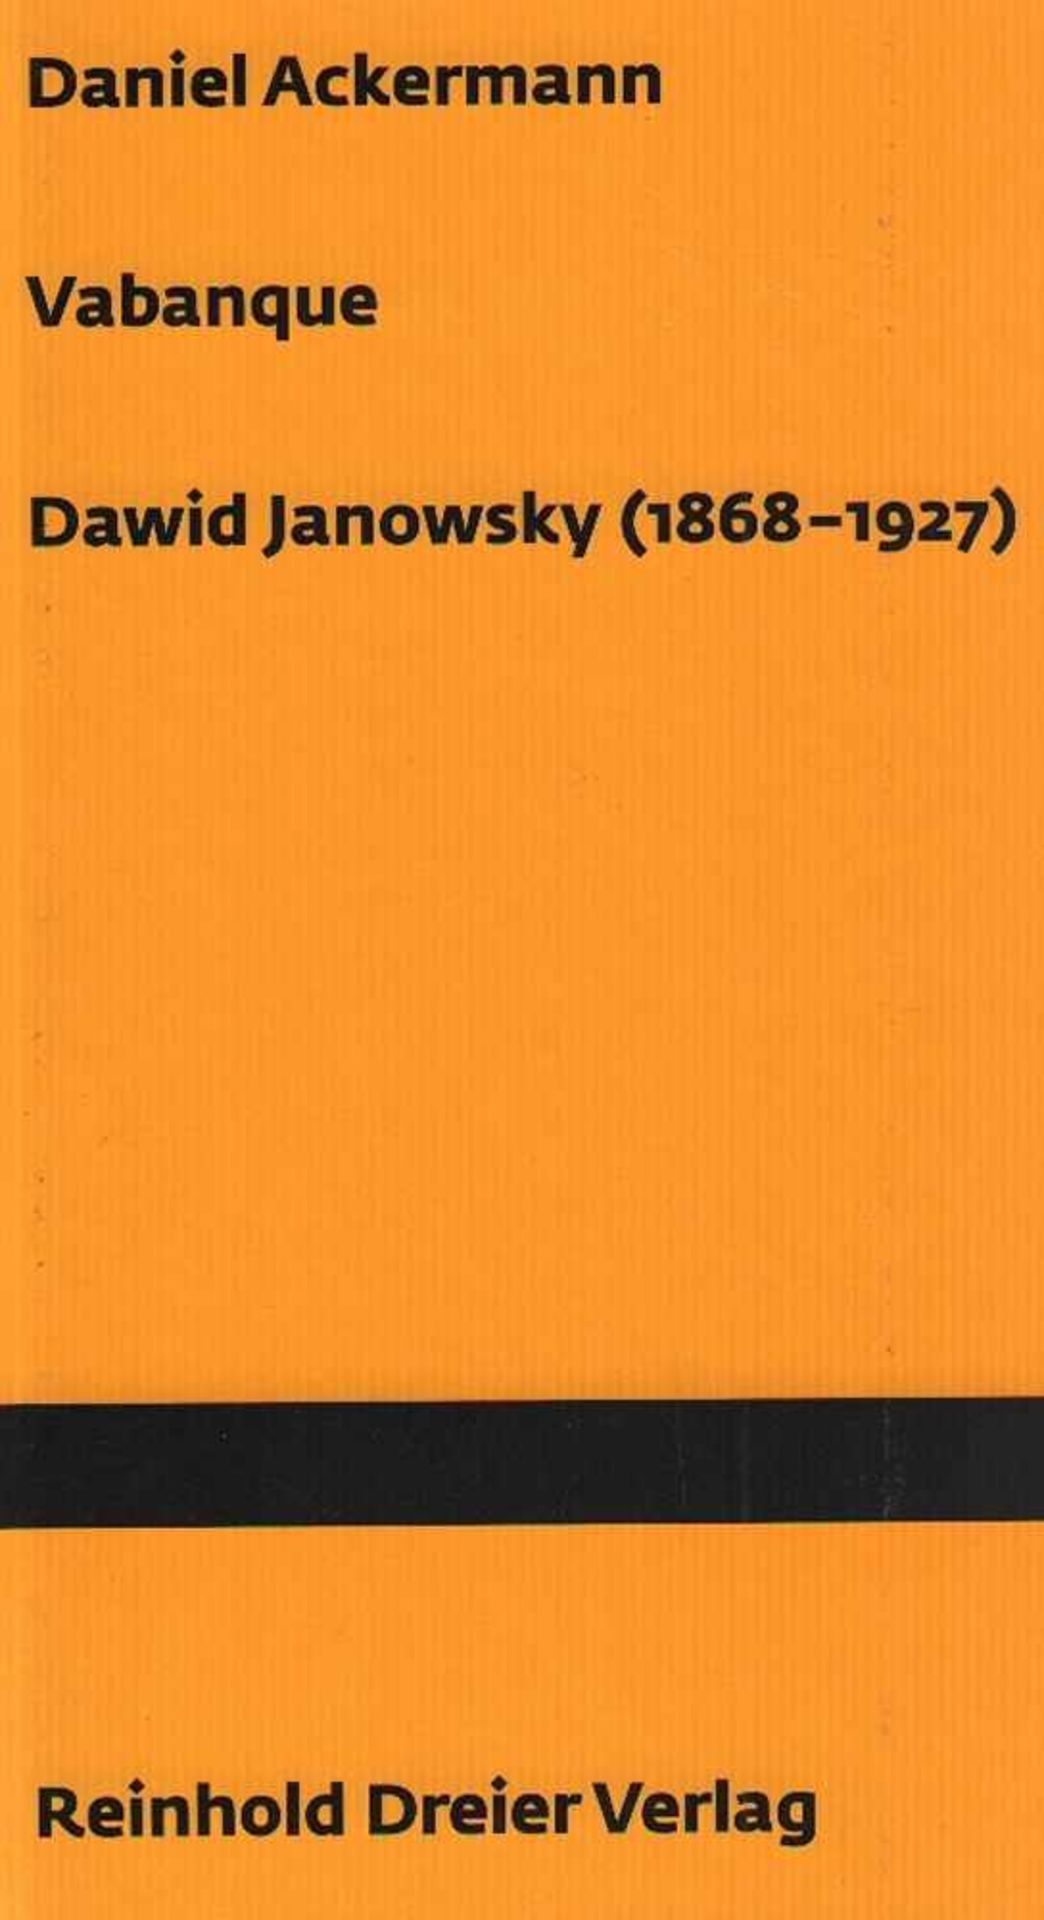 Janowsky. Ackermann, Daniel. Vabanque Dawid Janowsky 1868 - 1927. Ludwigshafen, Dreier, ca. 2005.